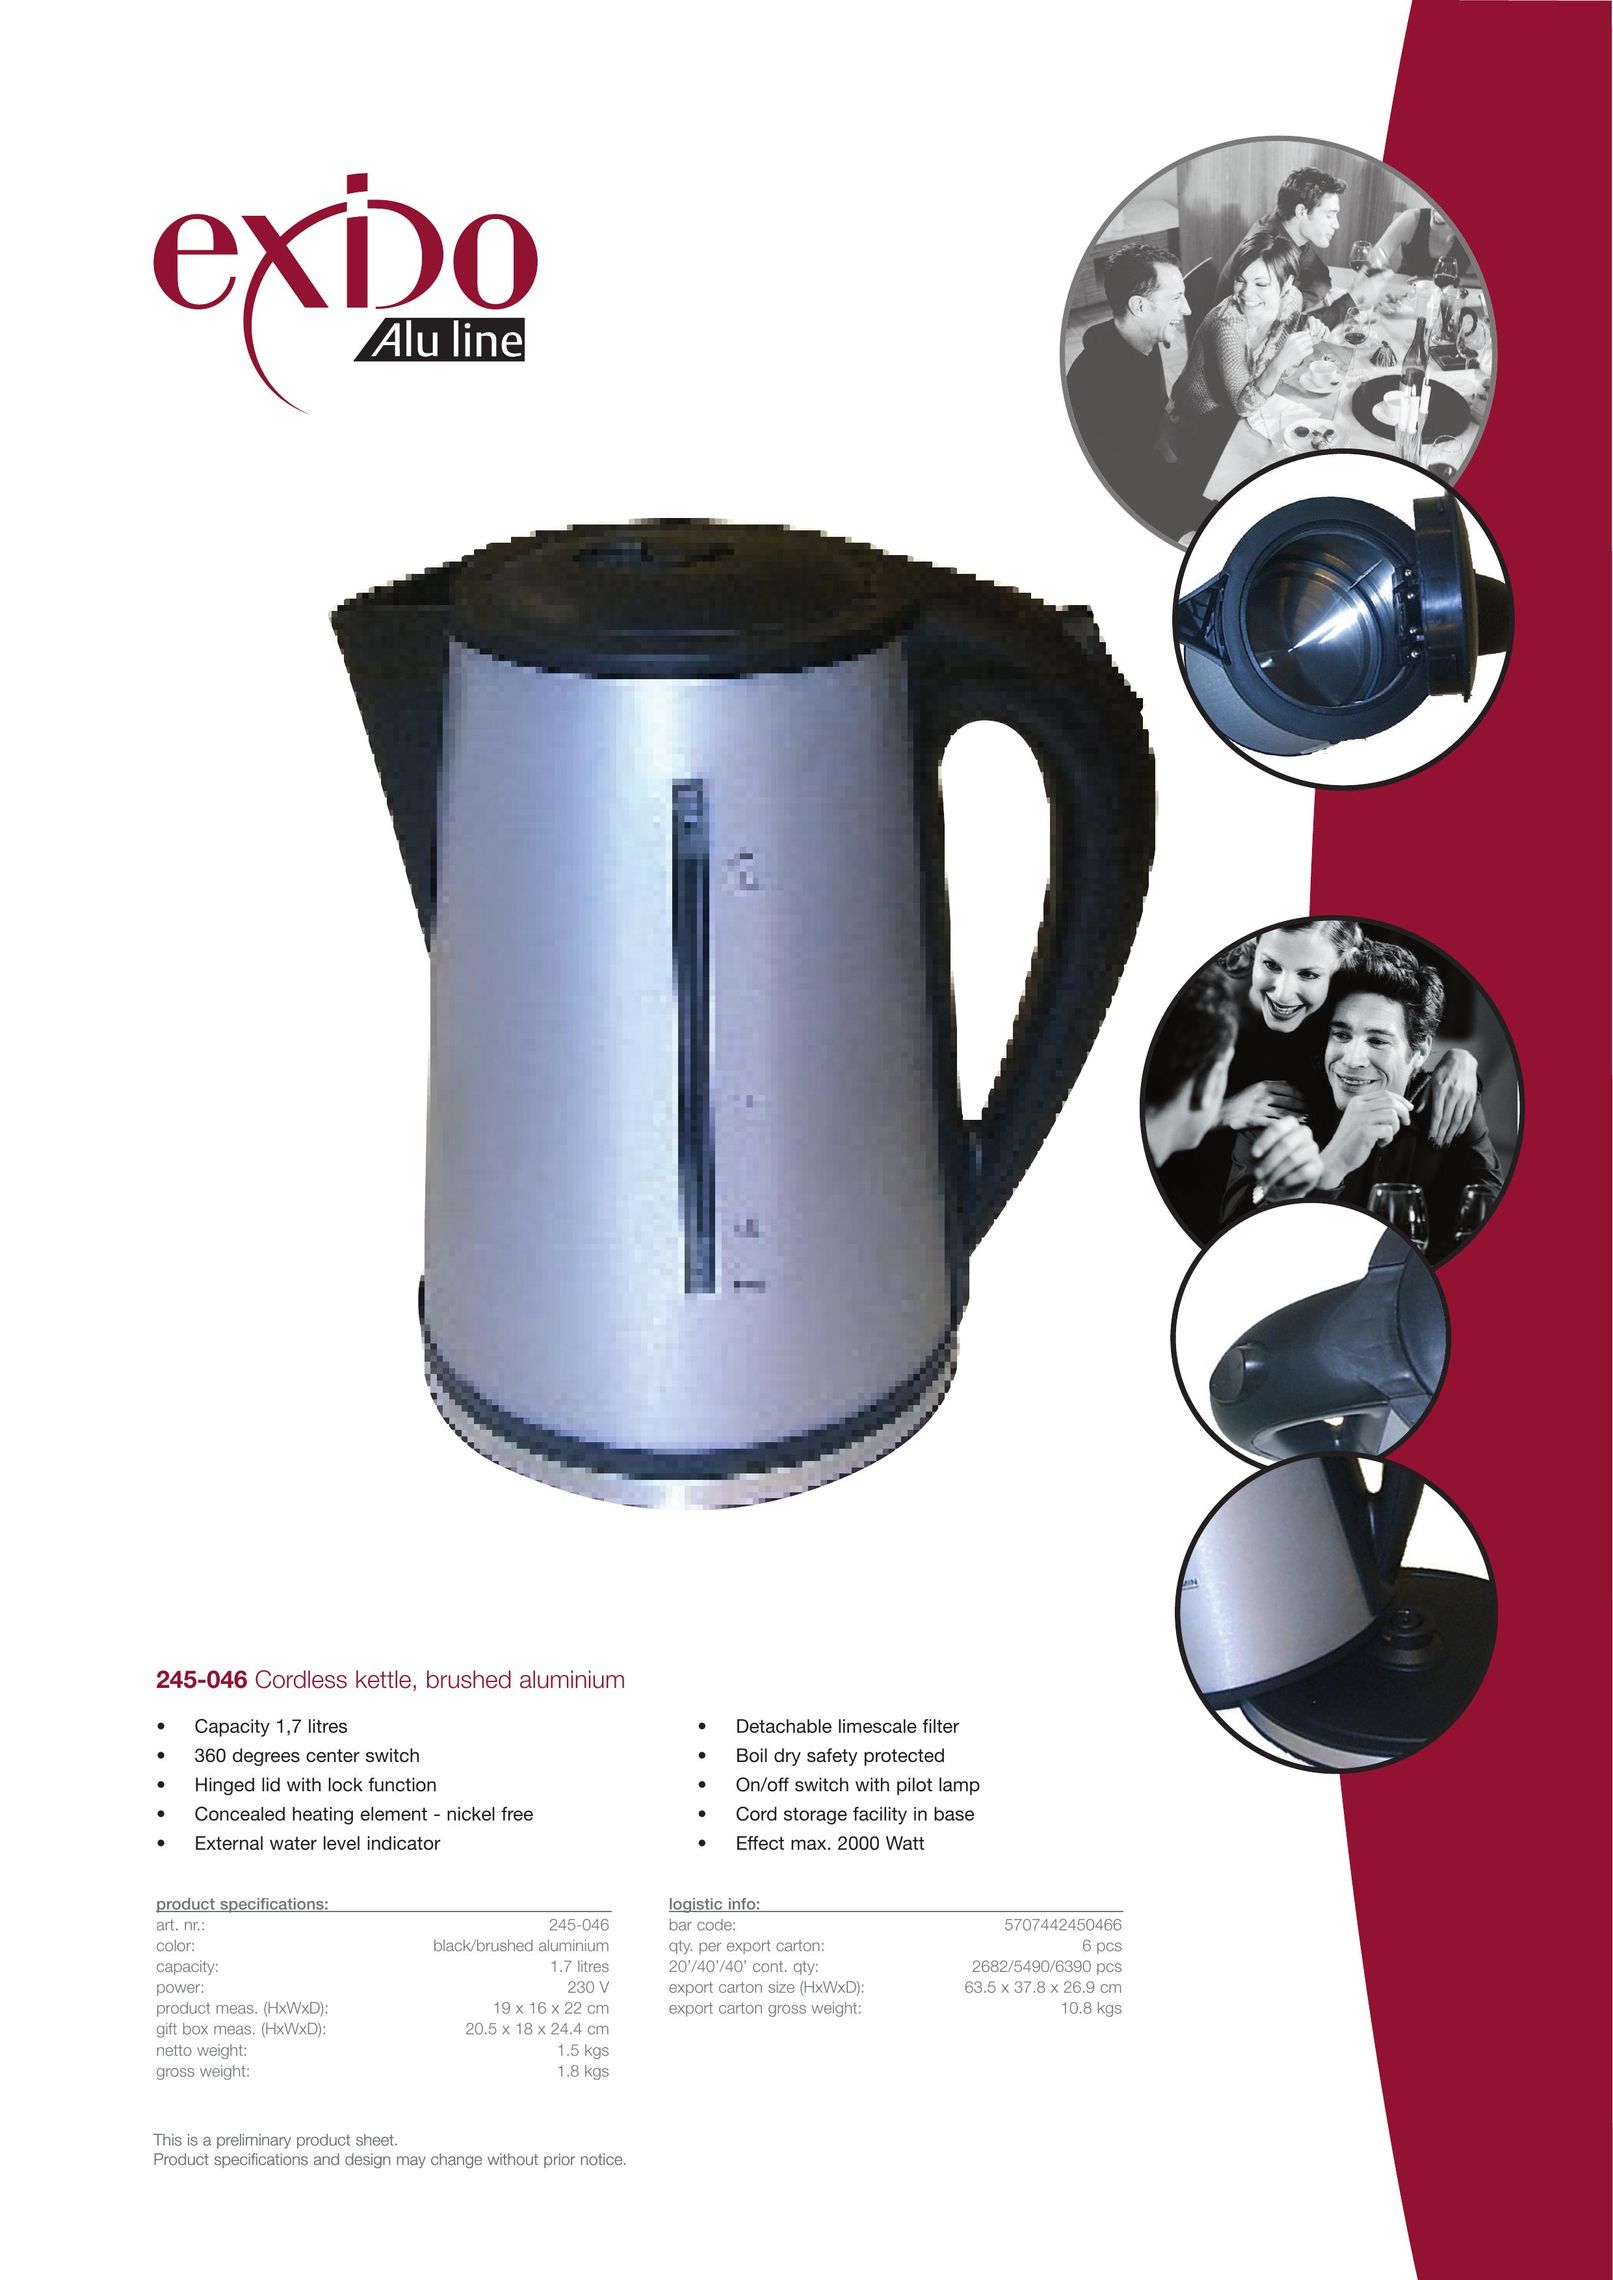 Exido 245-046 Hot Beverage Maker User Manual